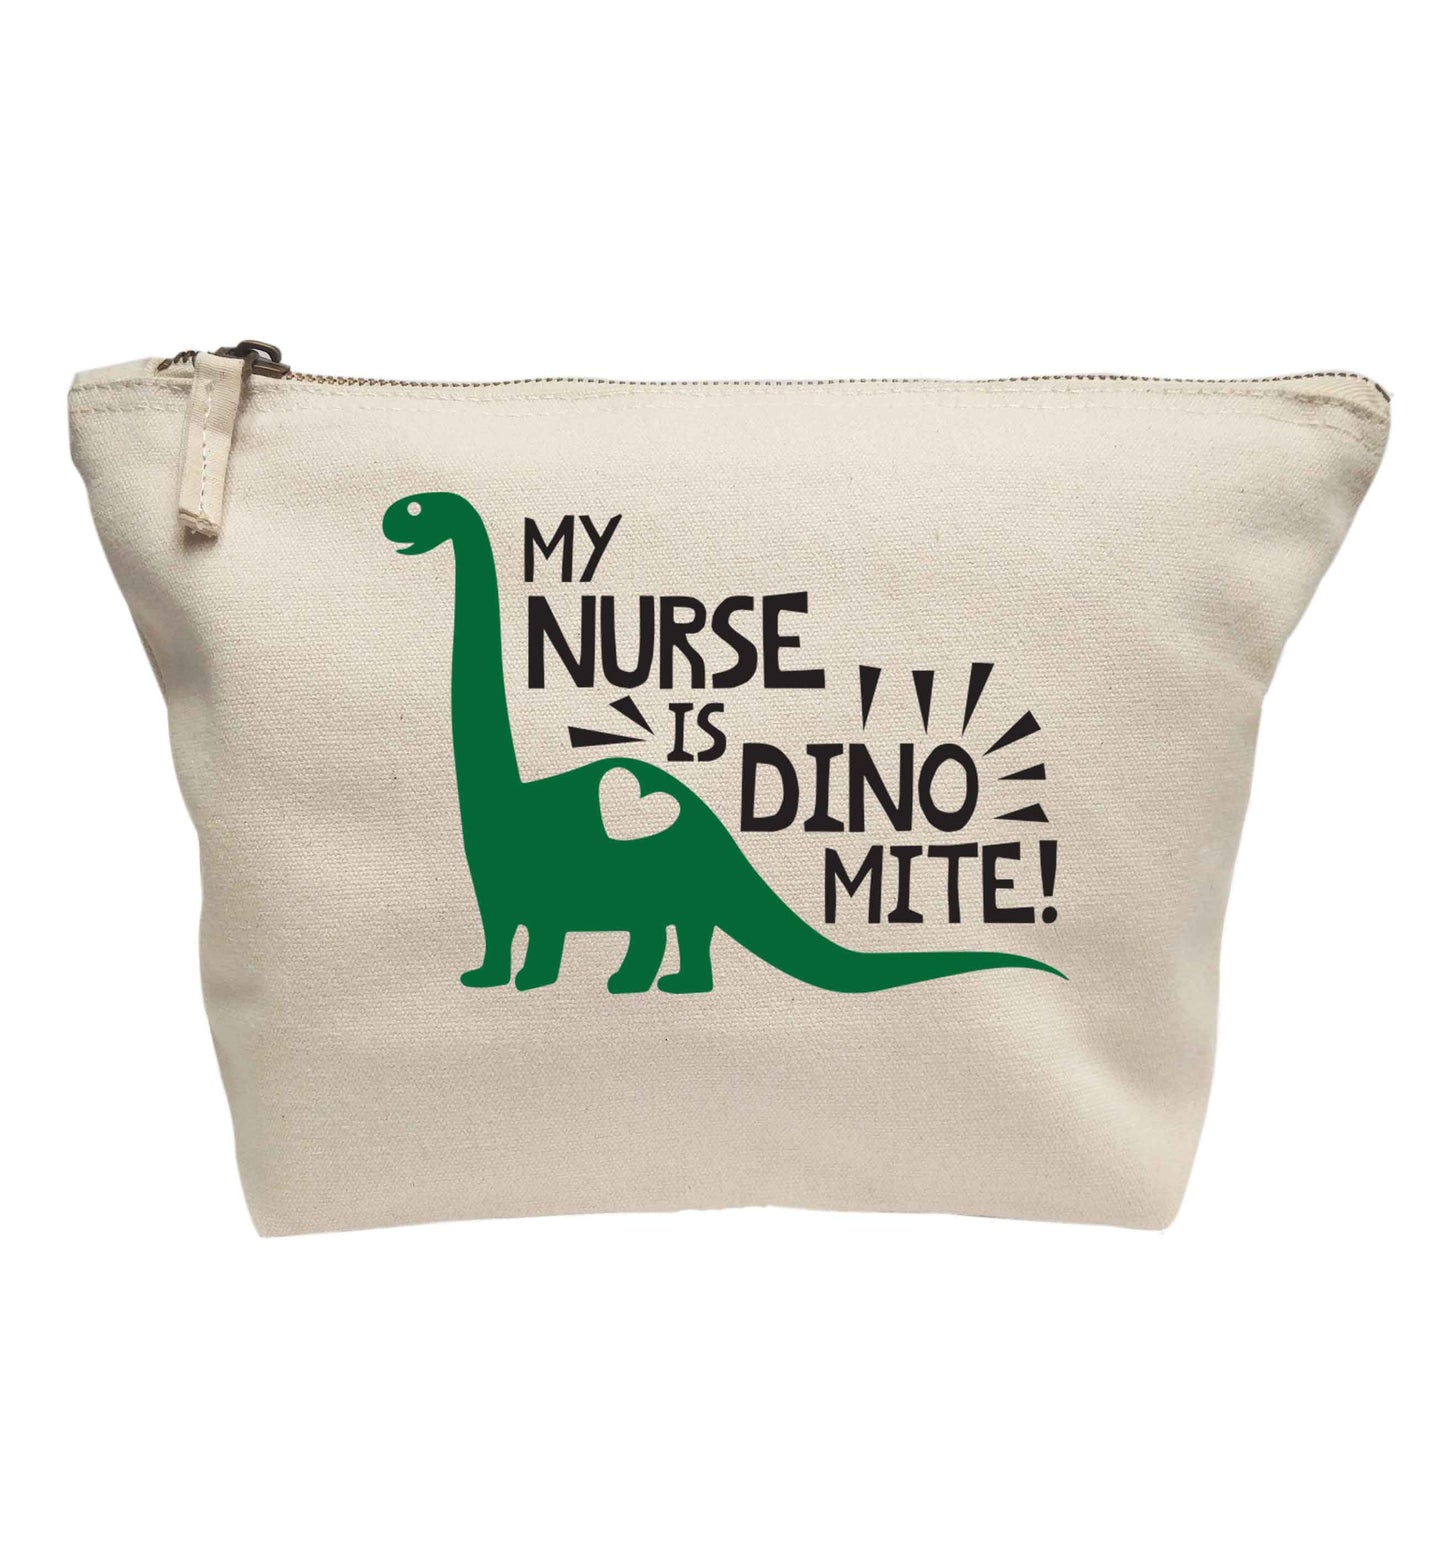 My nurse is dinomite! | makeup / wash bag